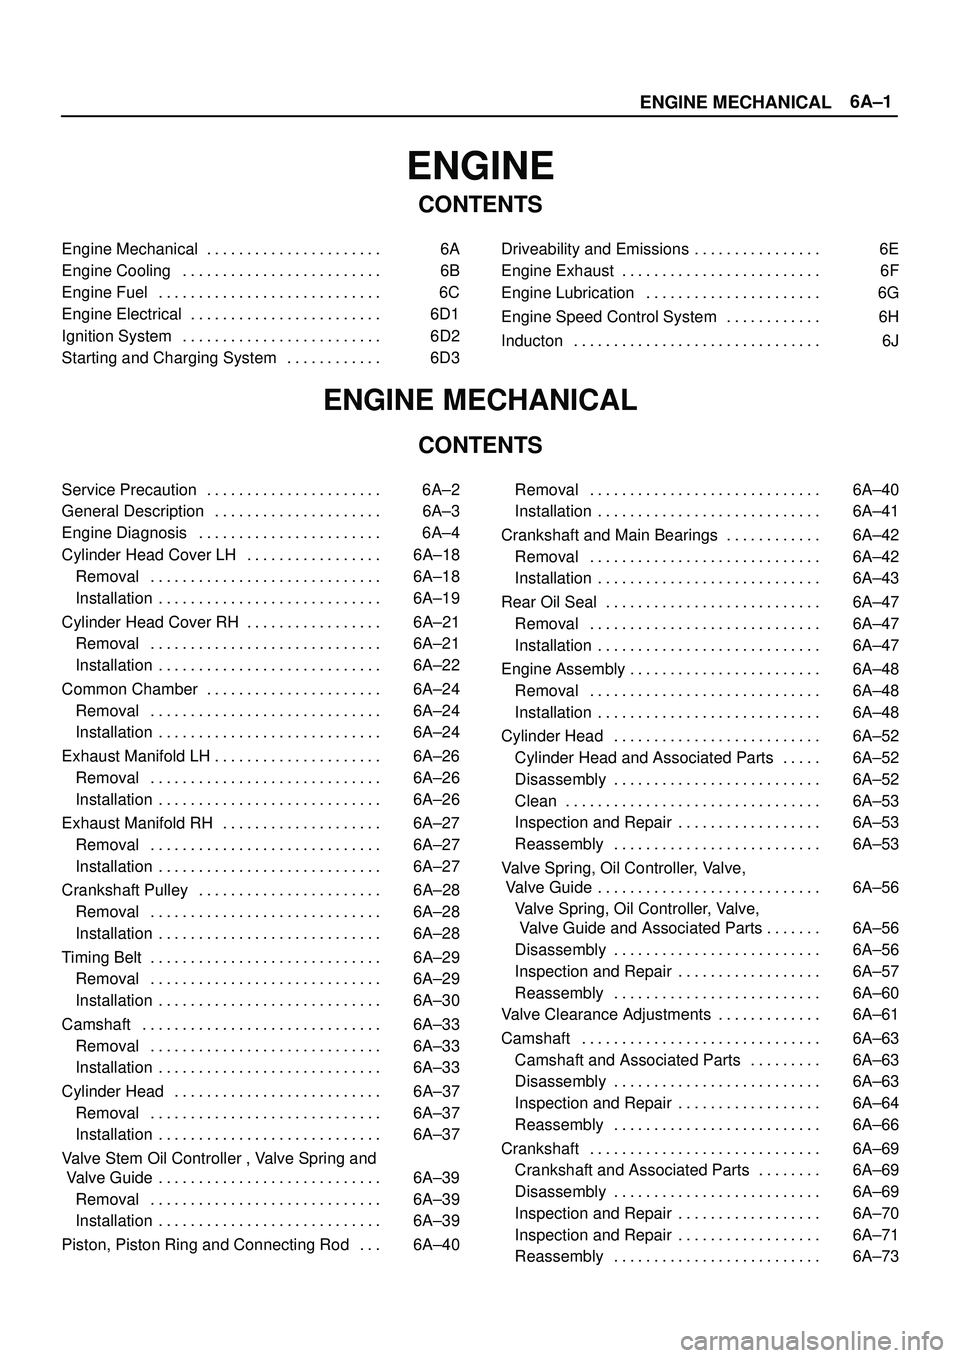 ISUZU TROOPER 1998  Service User Guide 6A±1
ENGINE MECHANICAL
ENGINE
CONTENTS
Engine Mechanical 6A. . . . . . . . . . . . . . . . . . . . . . 
Engine Cooling 6B. . . . . . . . . . . . . . . . . . . . . . . . . 
Engine Fuel 6C. . . . . . .